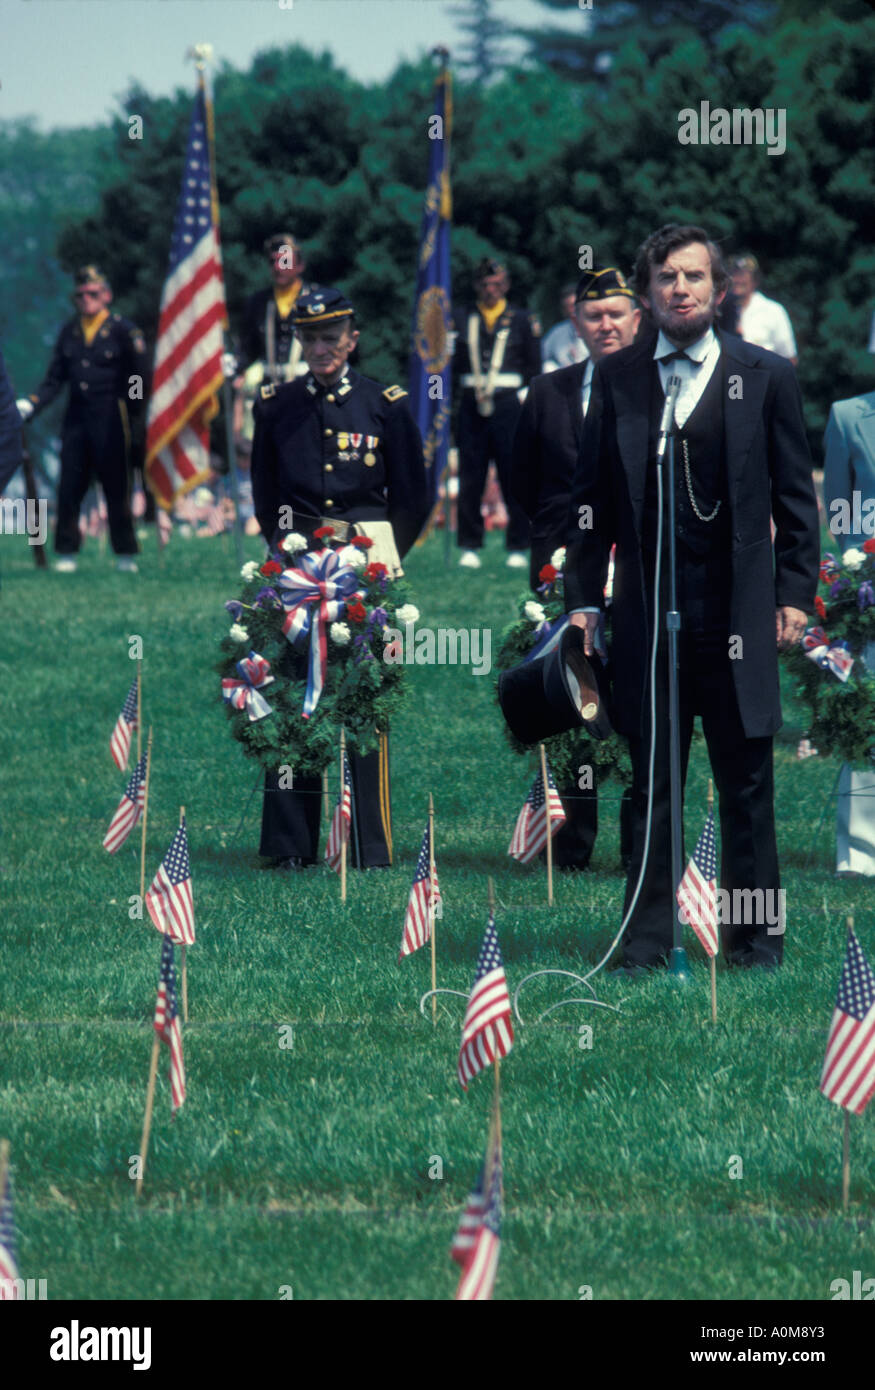 Abraham Lincoln Schauspieler Reenactor 4th of July Memorial Day Feier im Friedhof Stockfoto